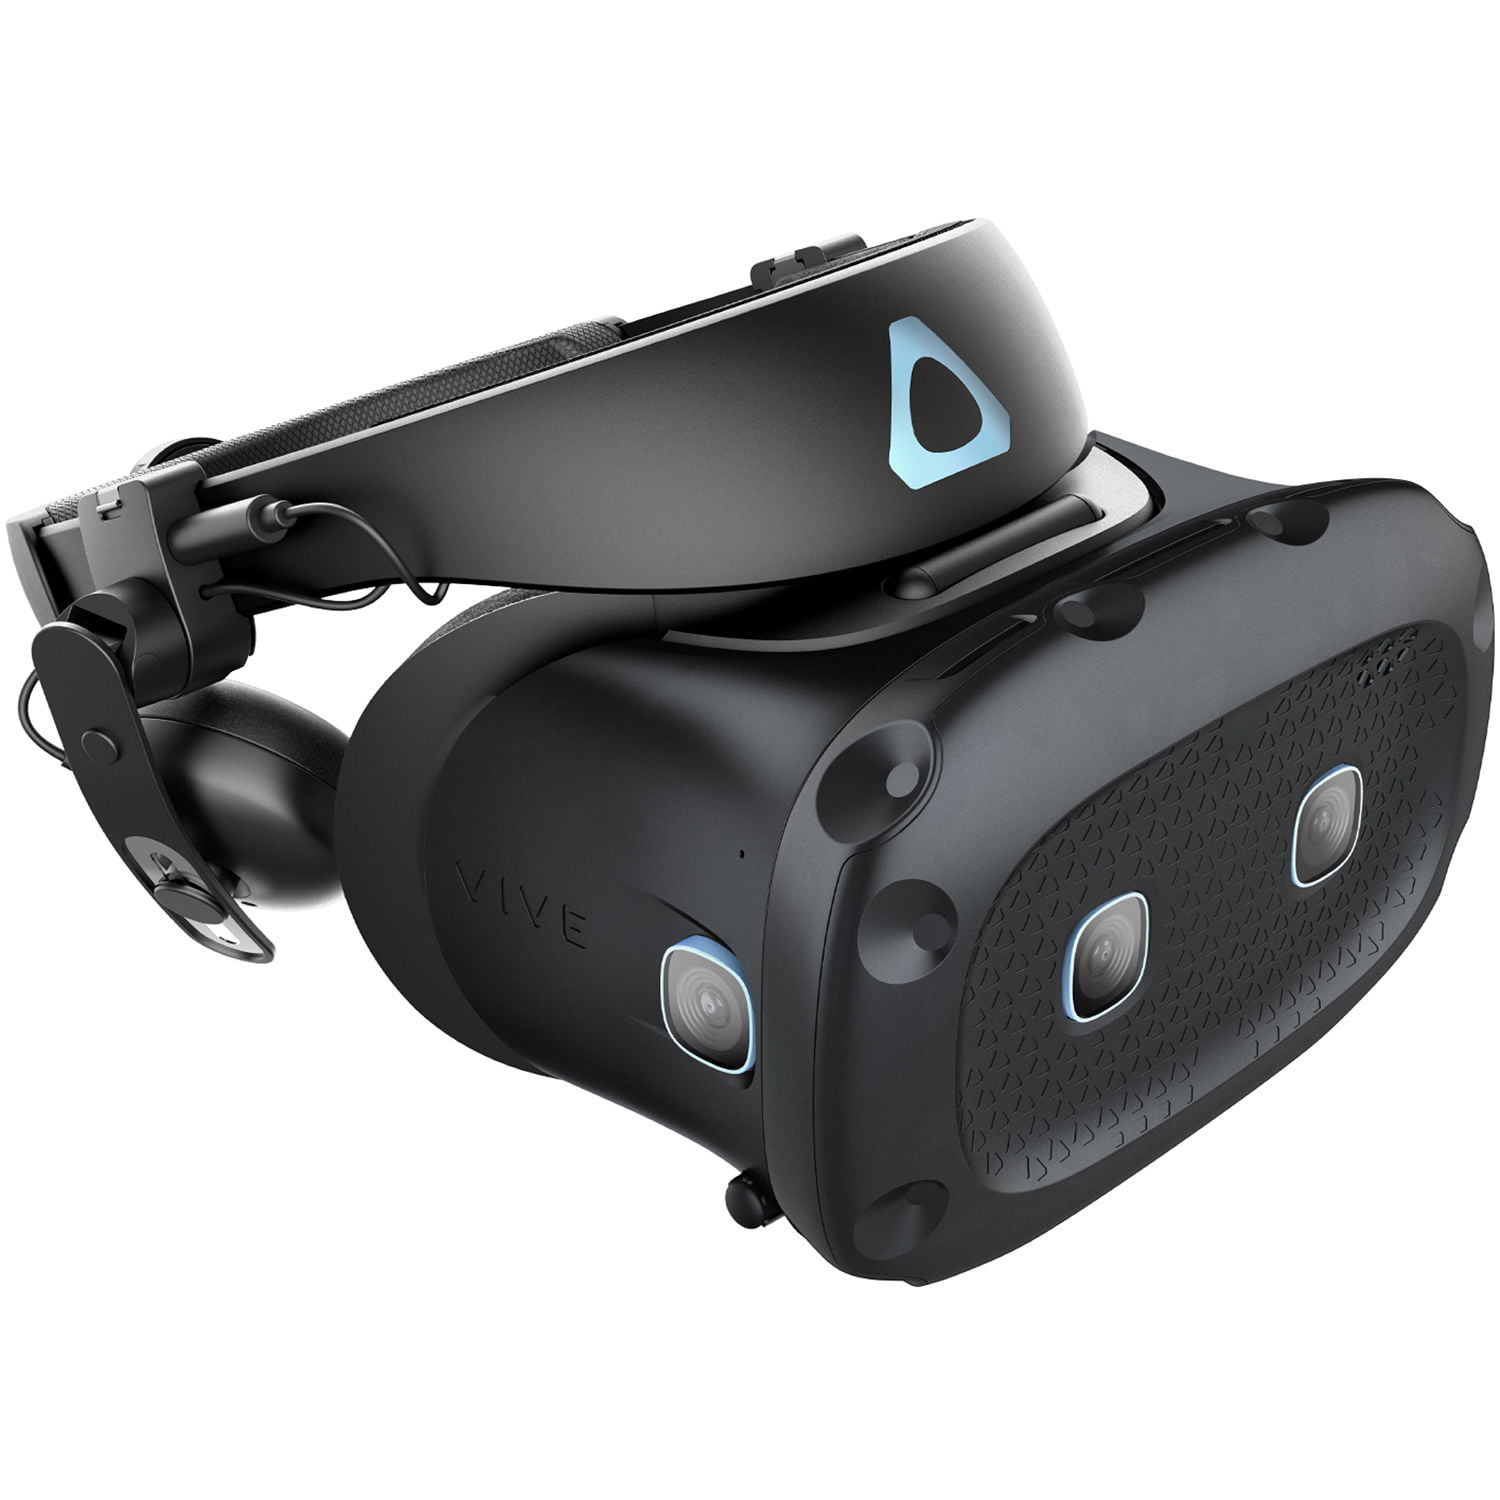 HTC Vive Cosmos Elite VR System